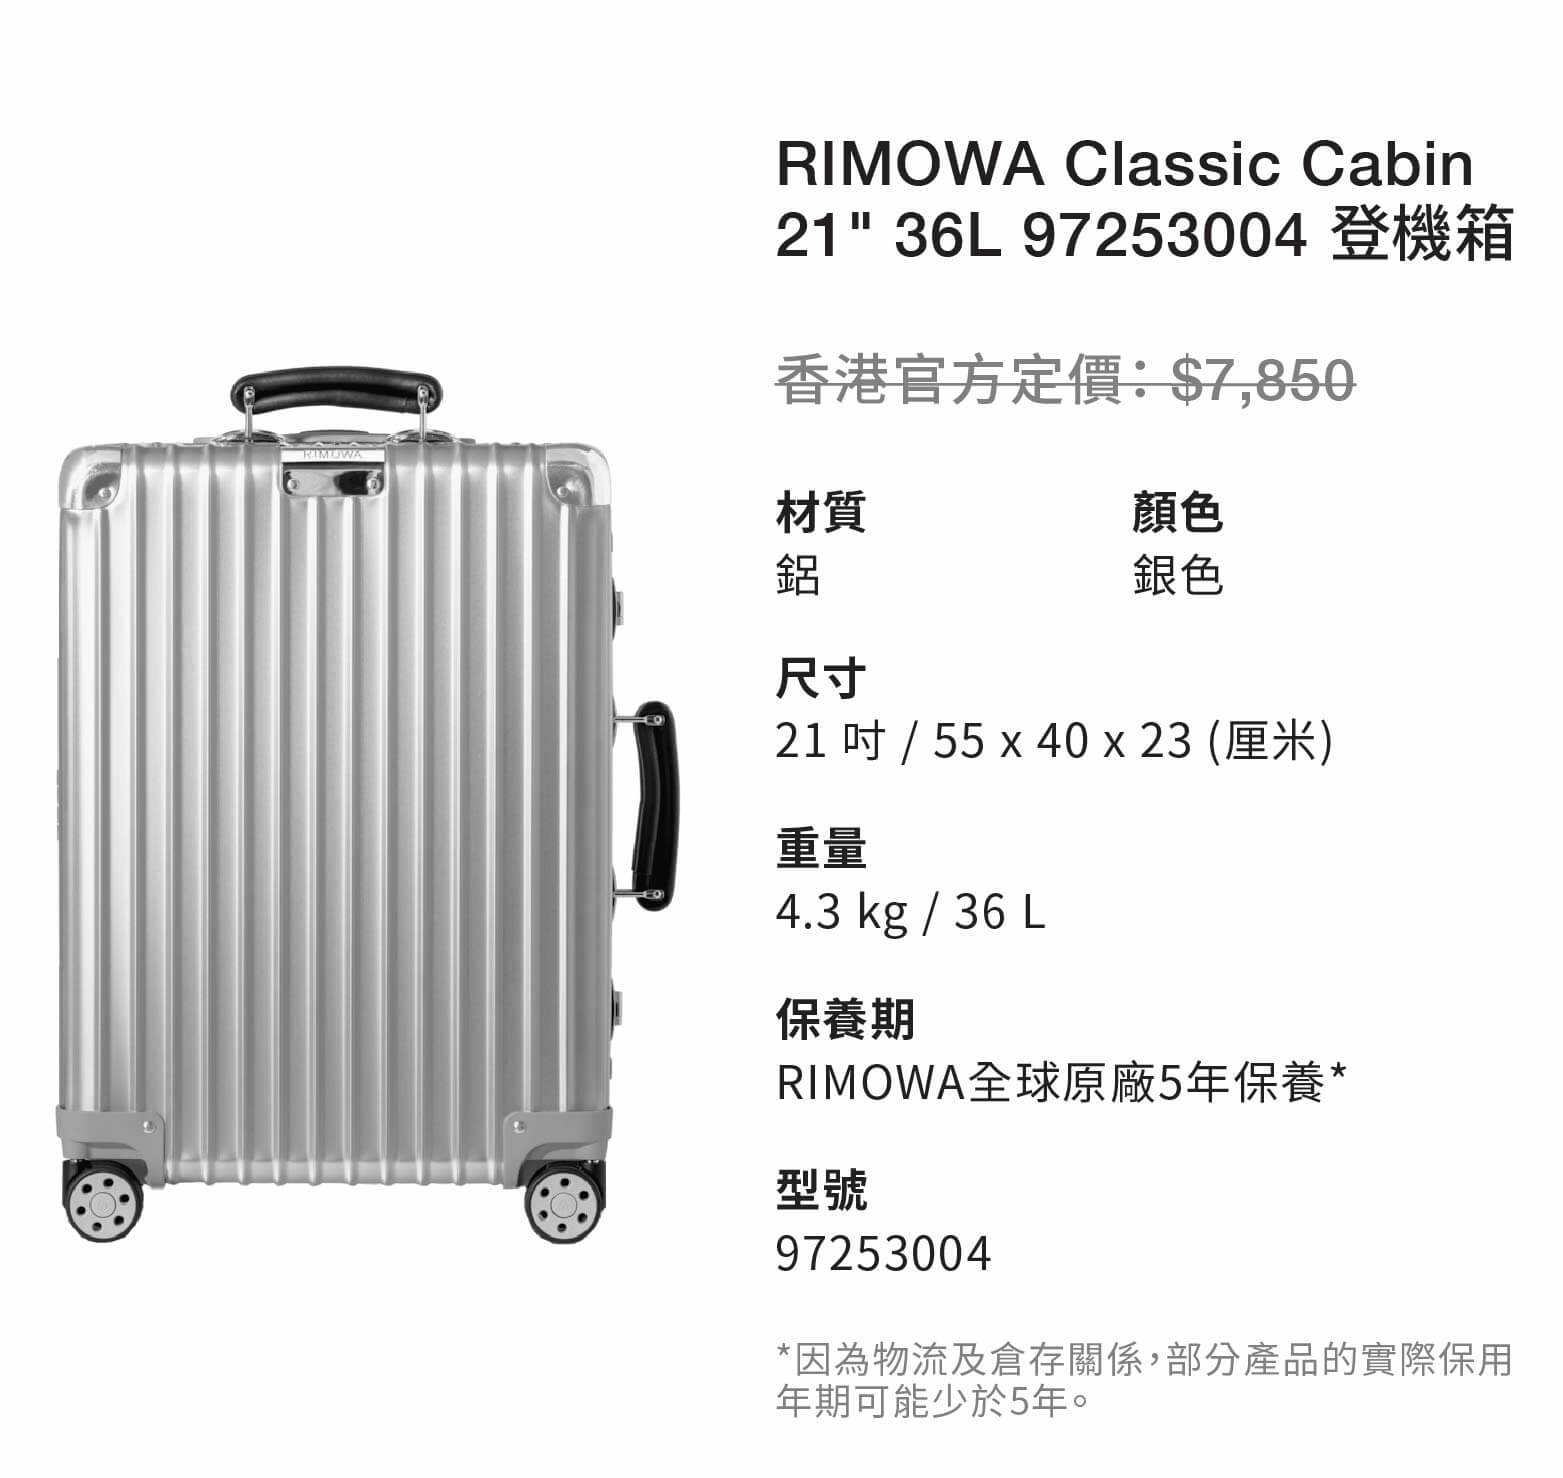 RIMOWA Classic Cabin 21